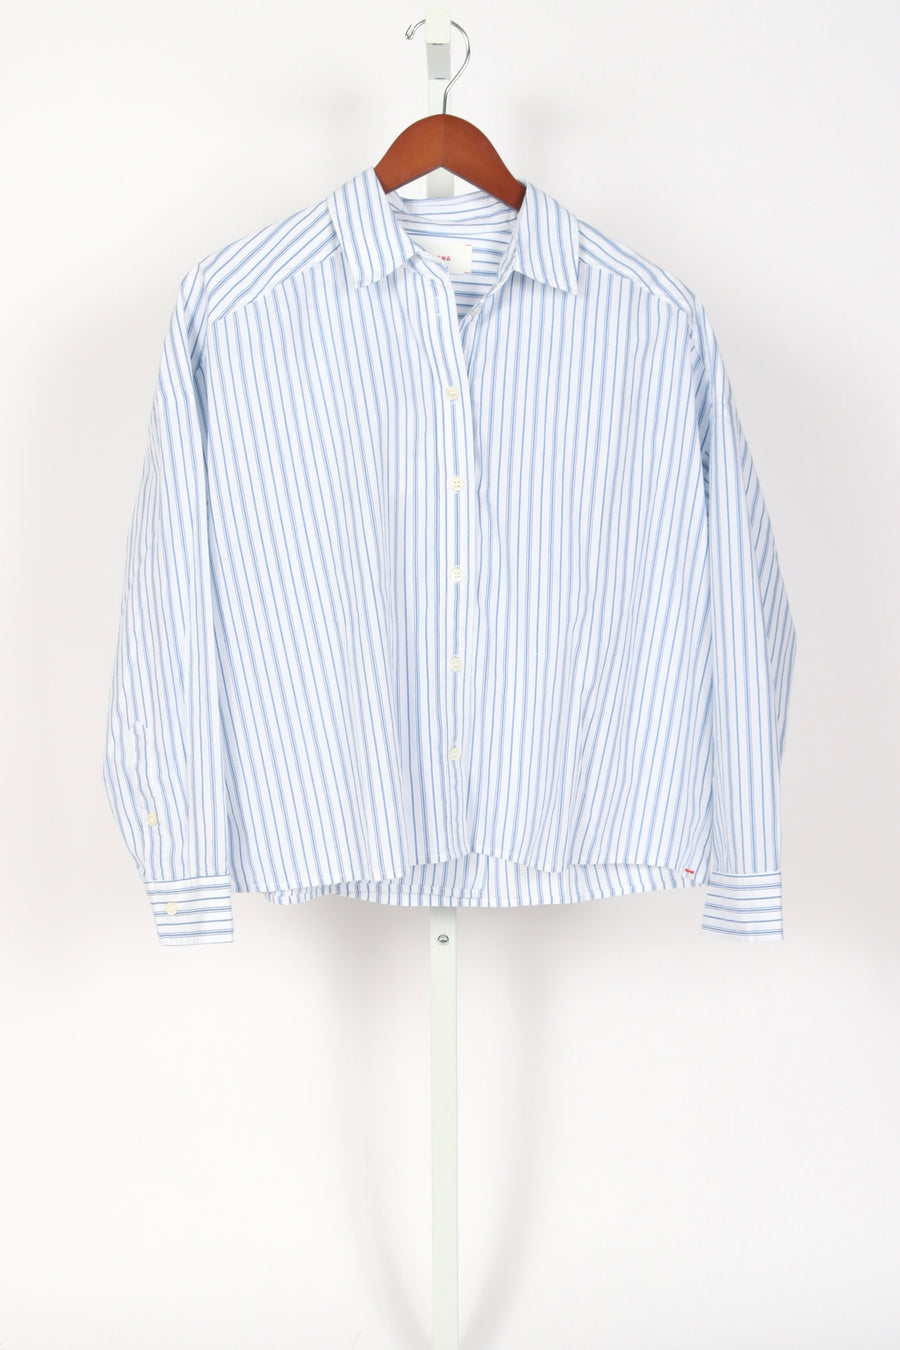 Riley Shirt - Coastal Stripe